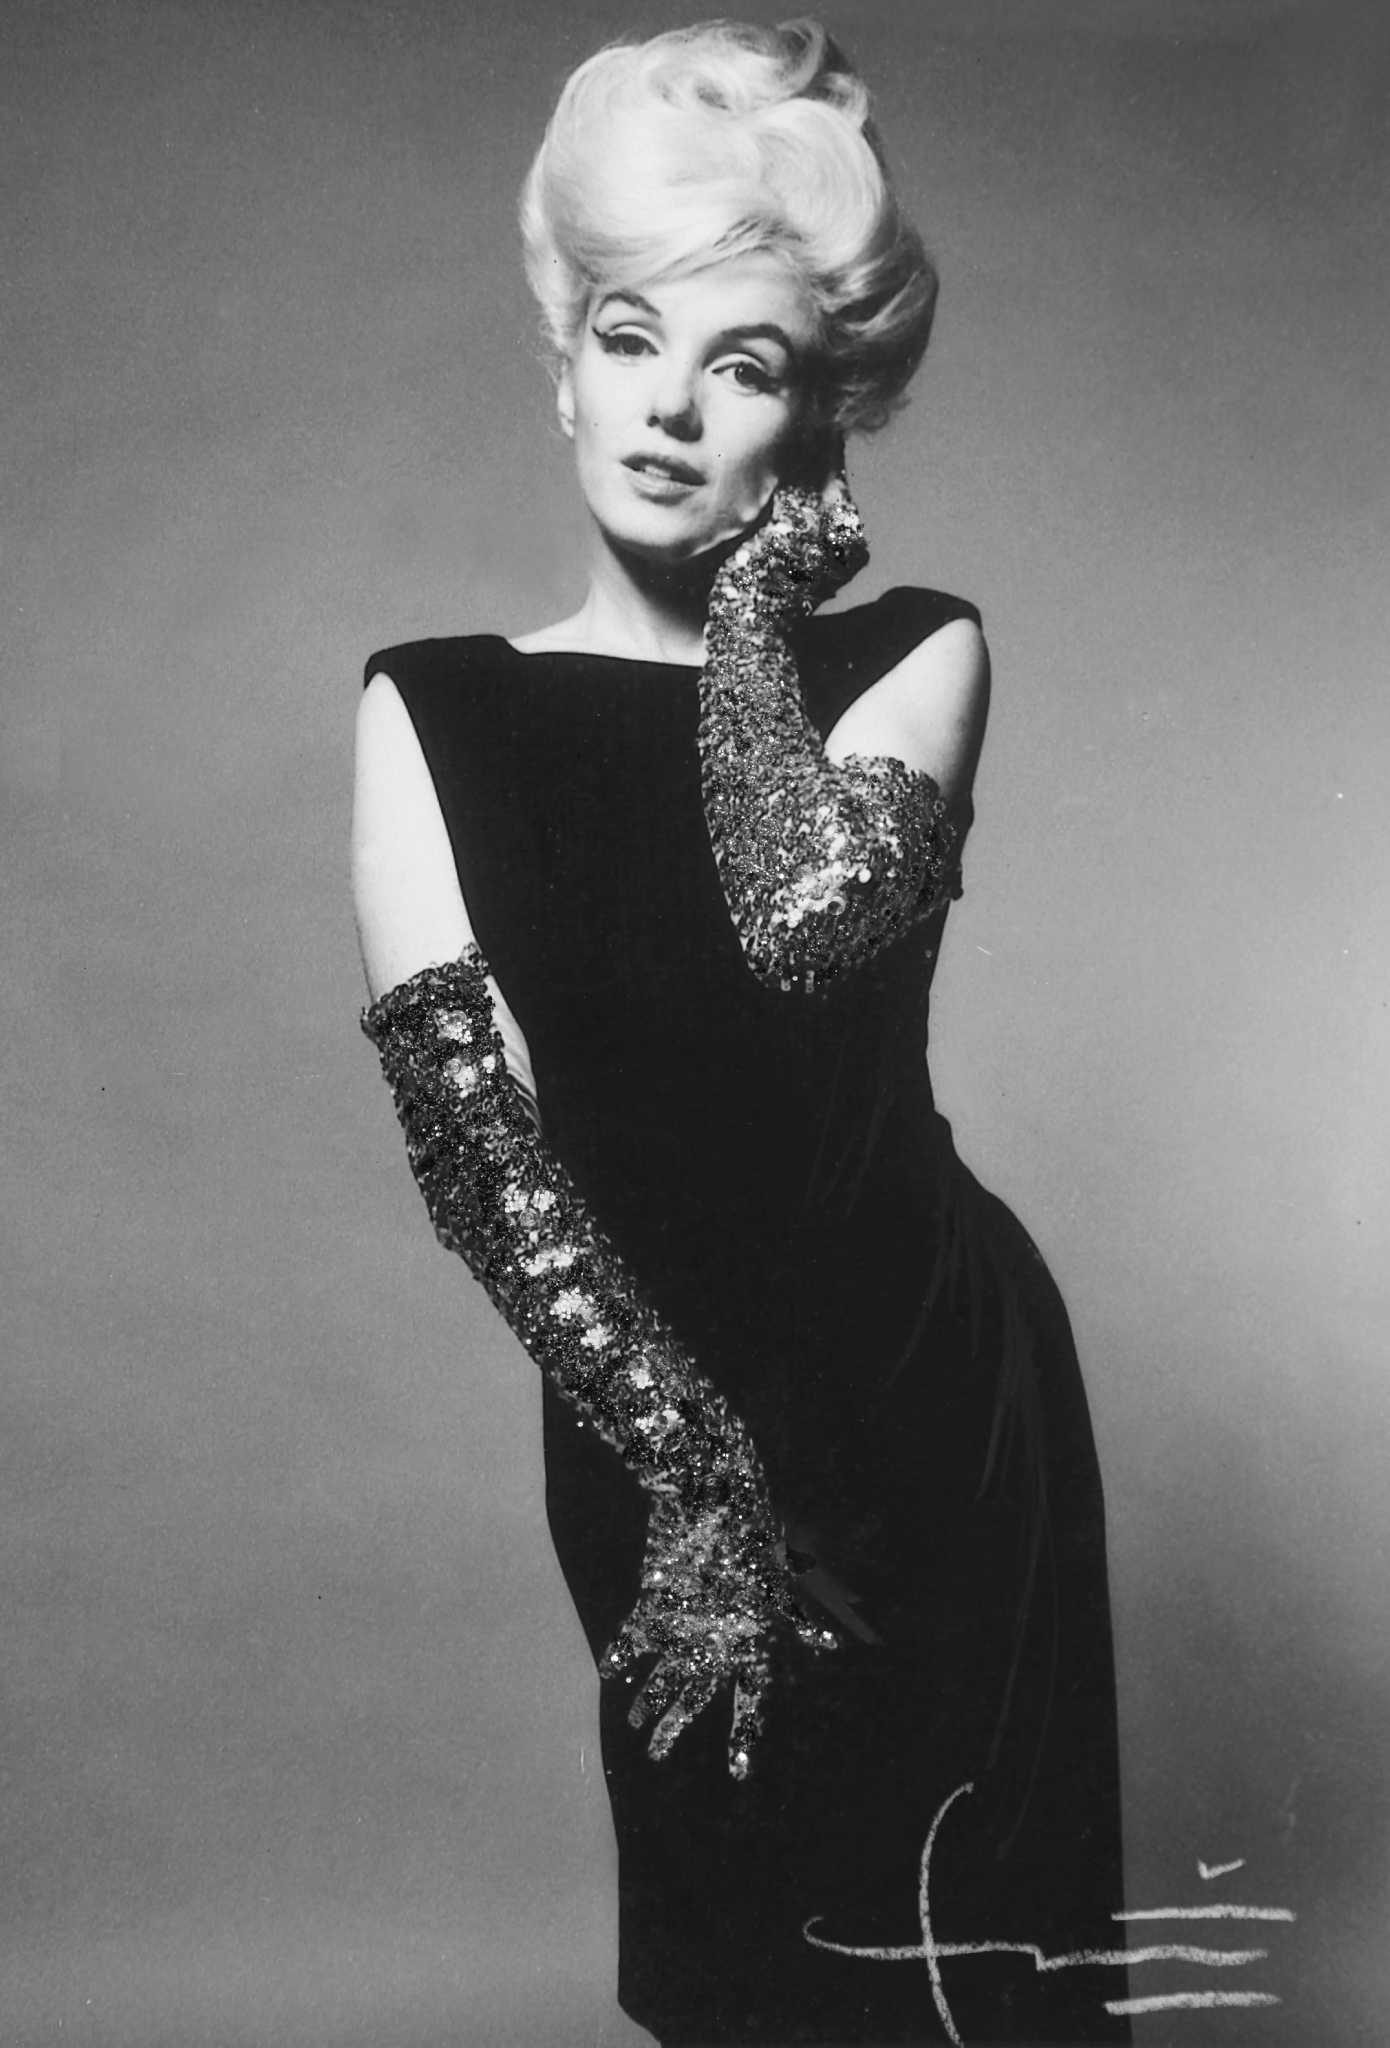 Stern's iconic 'Last Sitting' Marilyn Monroe photos get Norwalk showing